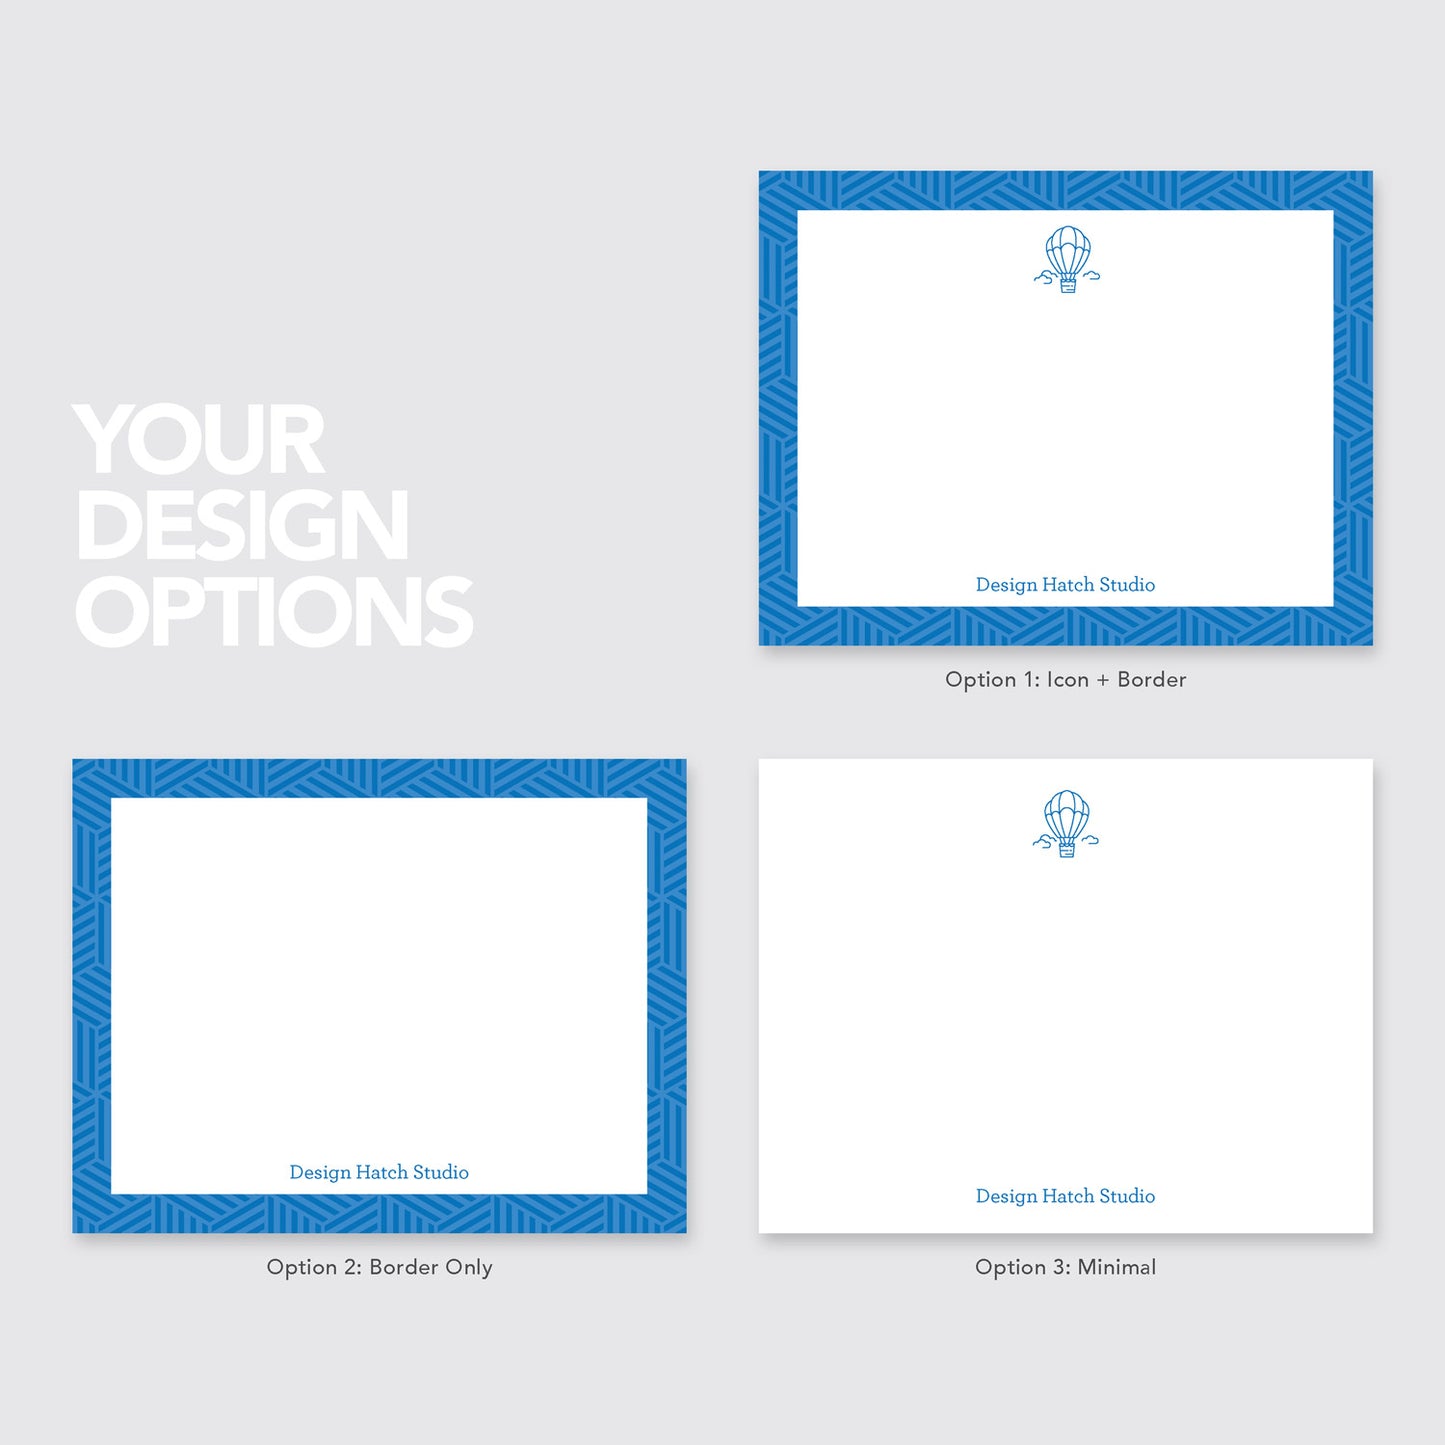 Balloon - Custom Stationery - 24 flat cards with envelopes - Design Hatch Studio